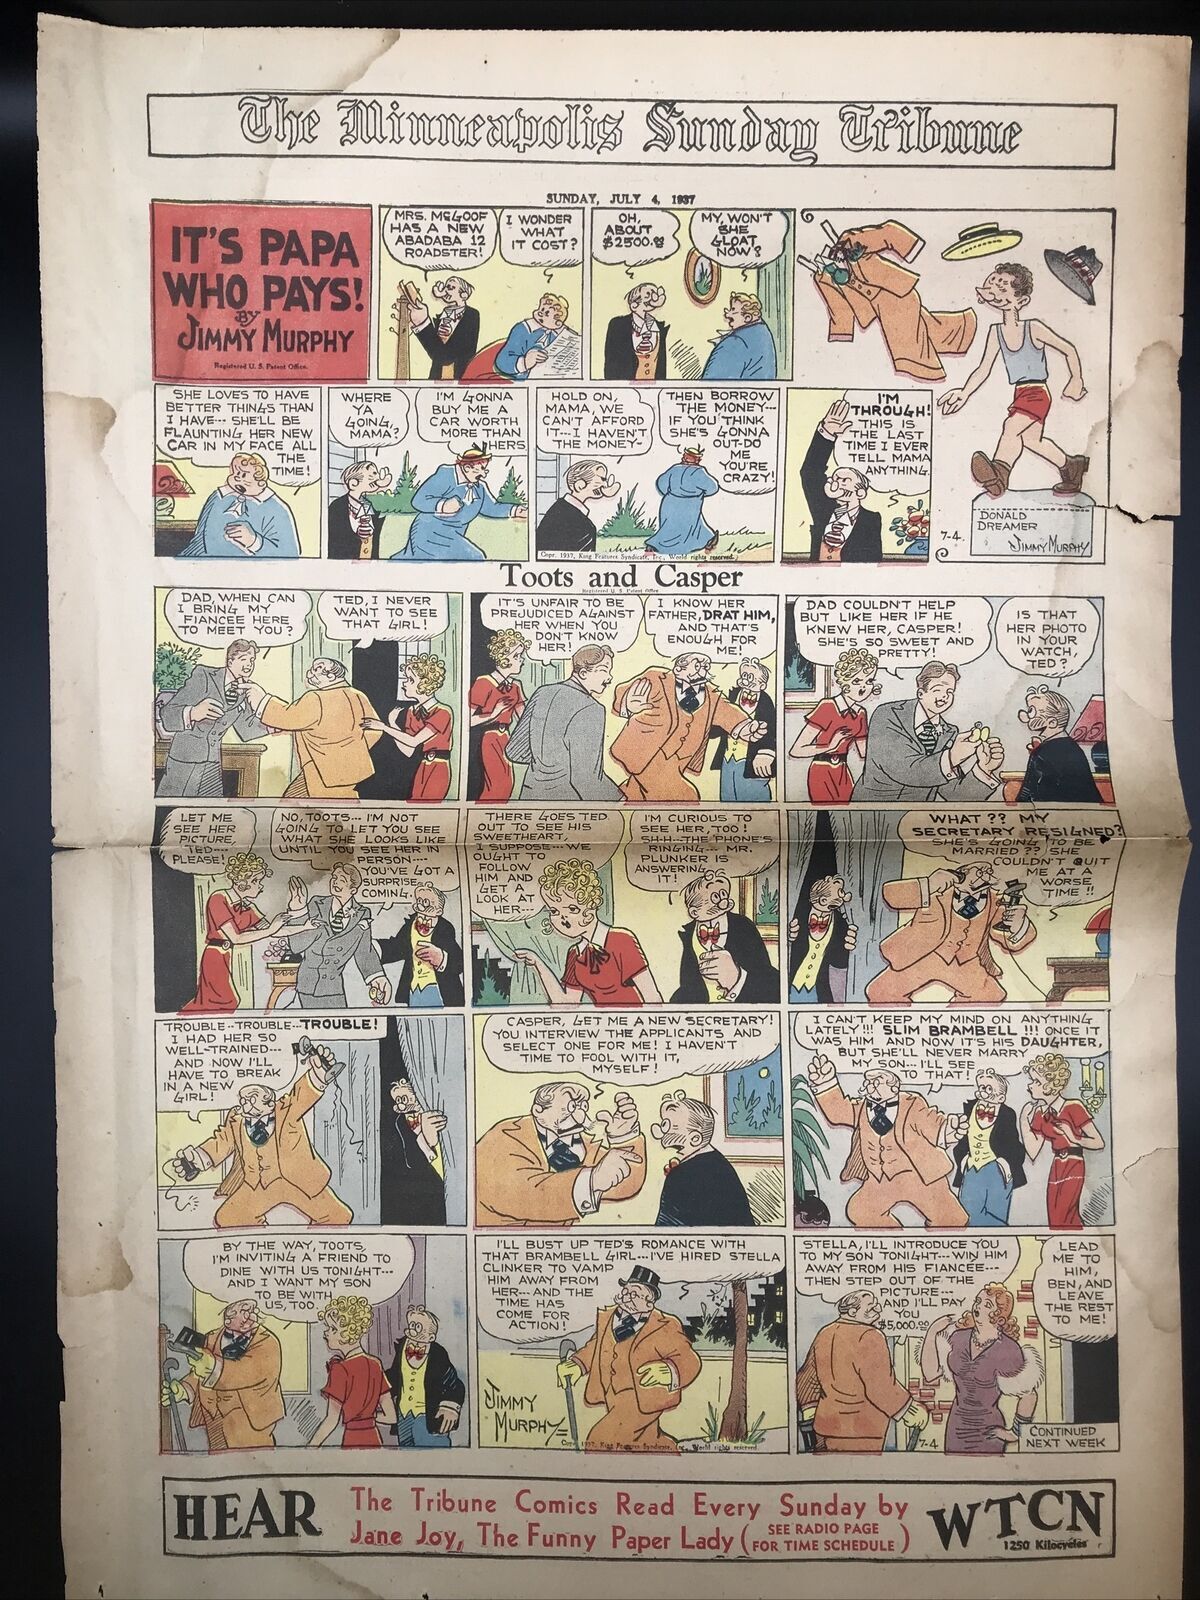 1937 July 4 MINNEAPOLIS TRIBUNE COLOR SUNDAY COMICS SECTION Ming Foo It's Papa